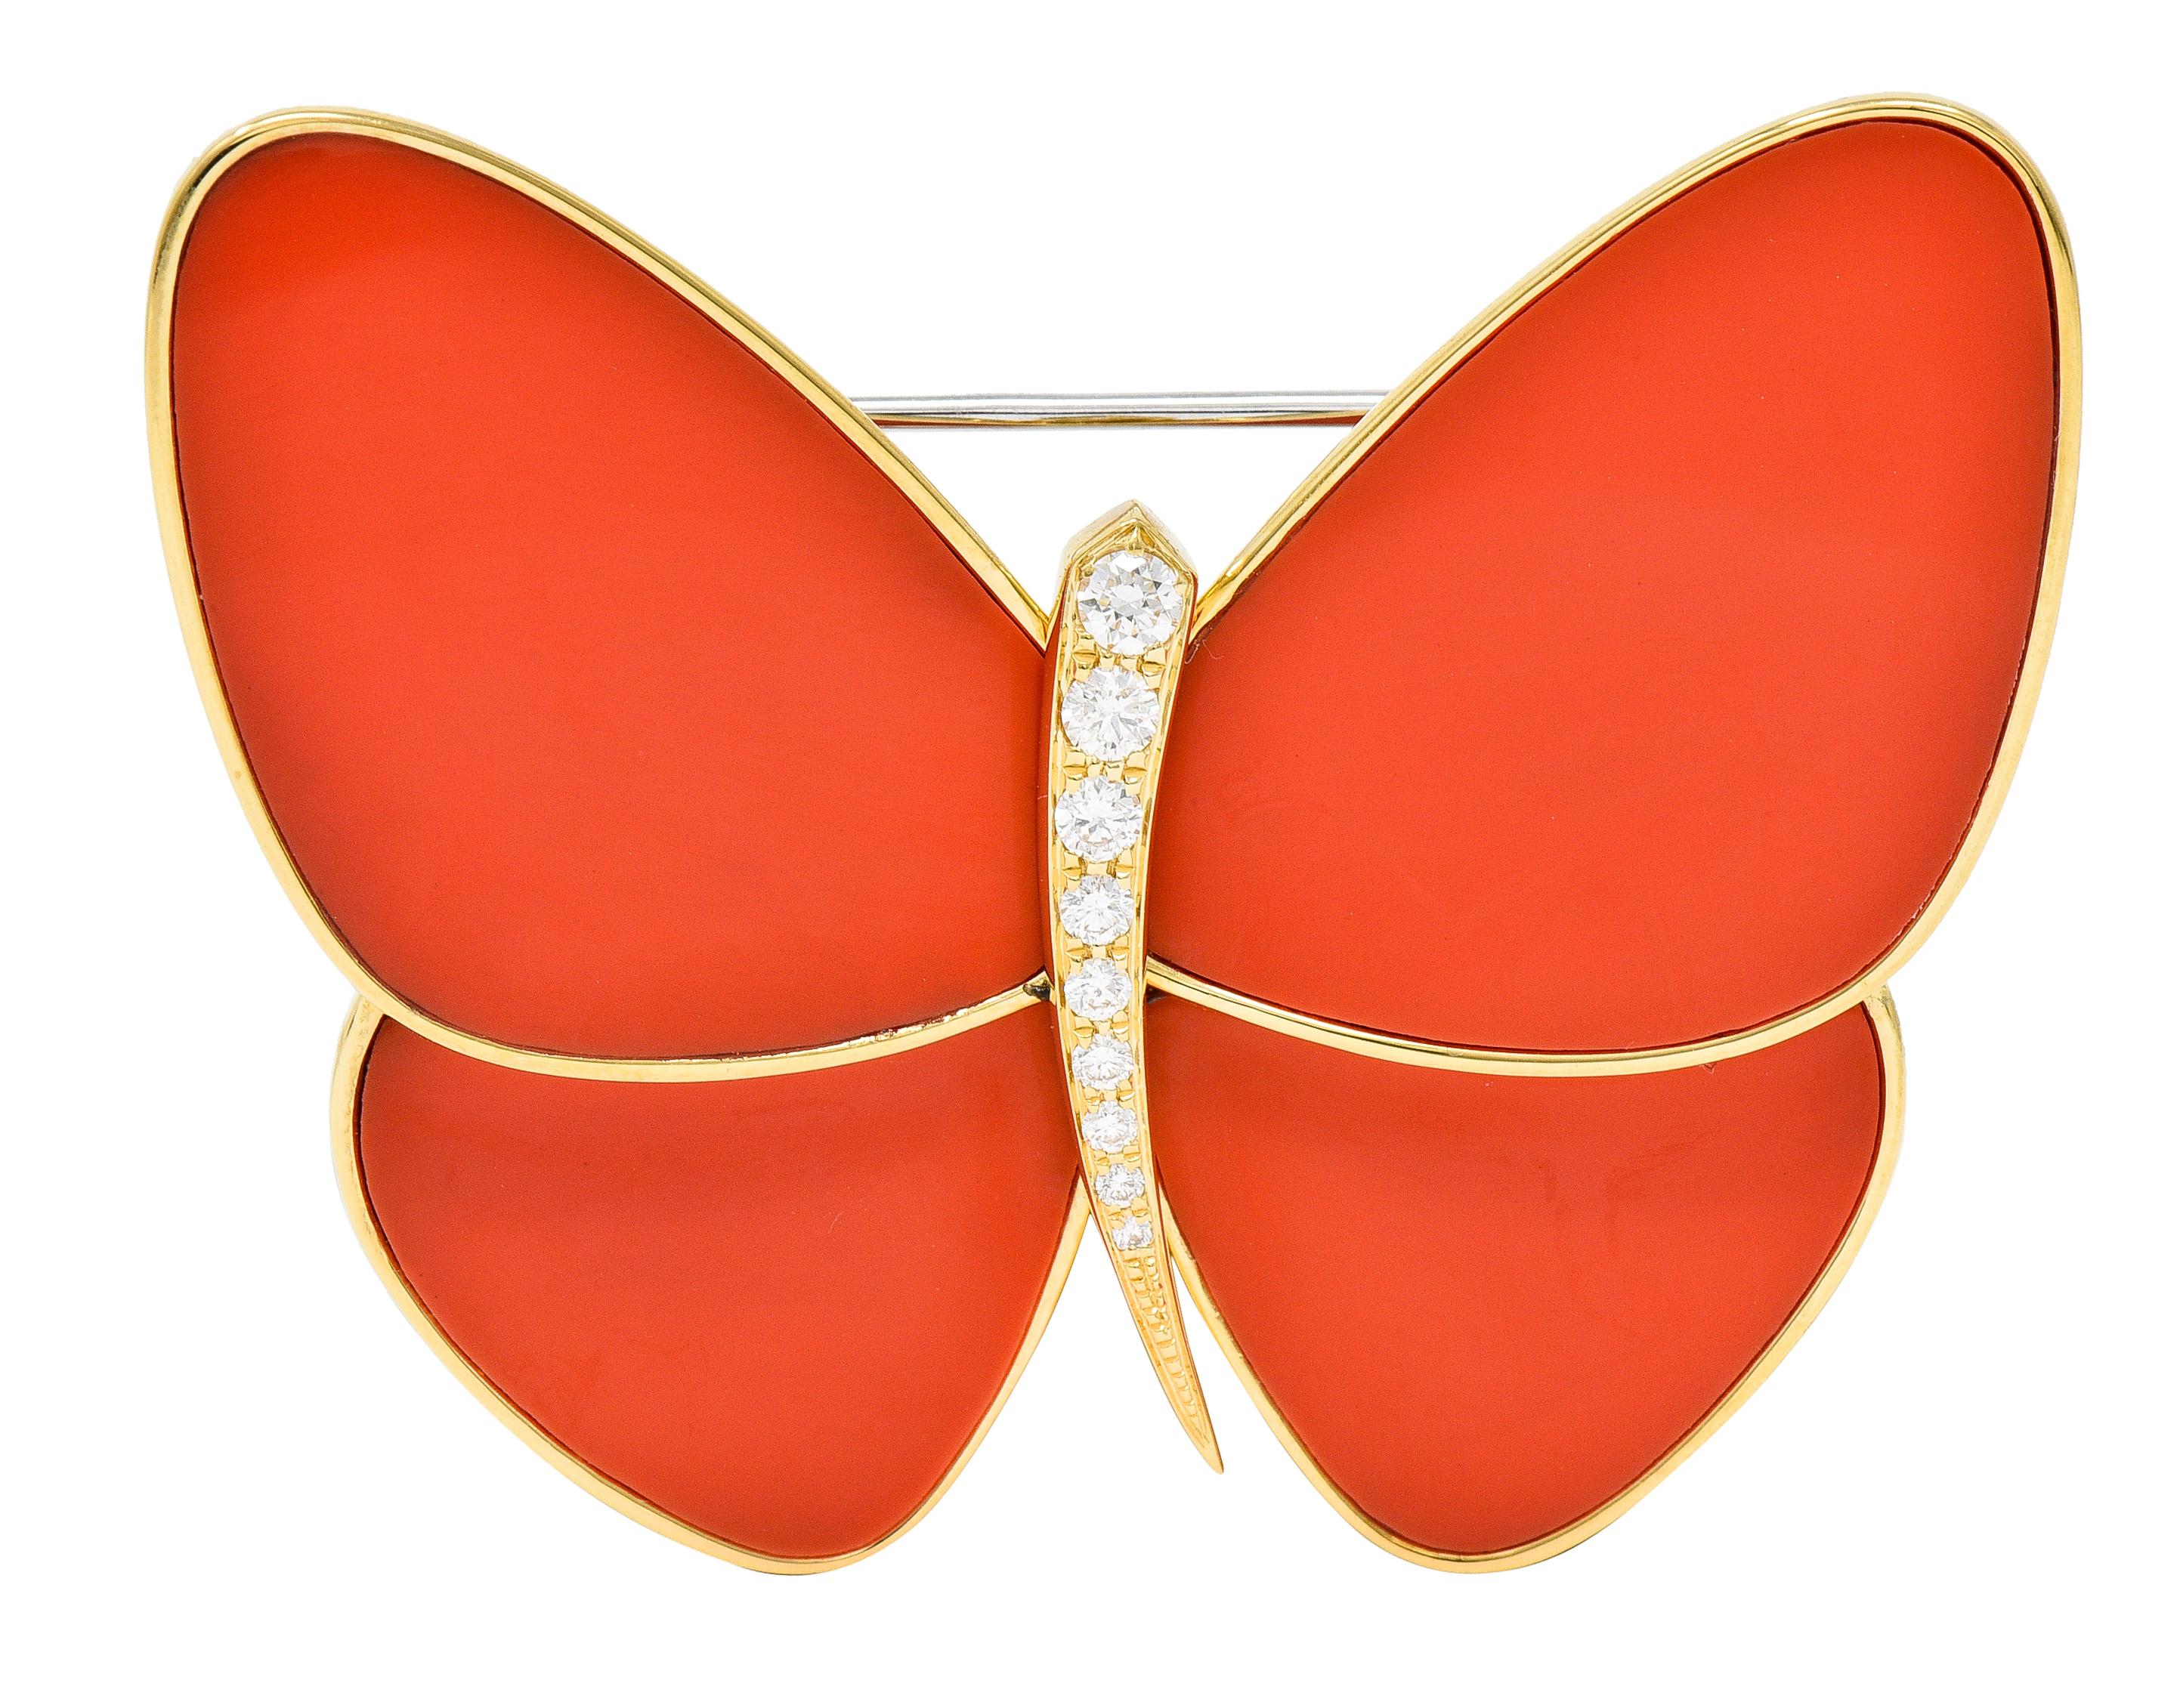 Brilliant Cut Van Cleef & Arpels Coral Diamond 18 Karat Yellow Gold Papillon Butterfly Brooch